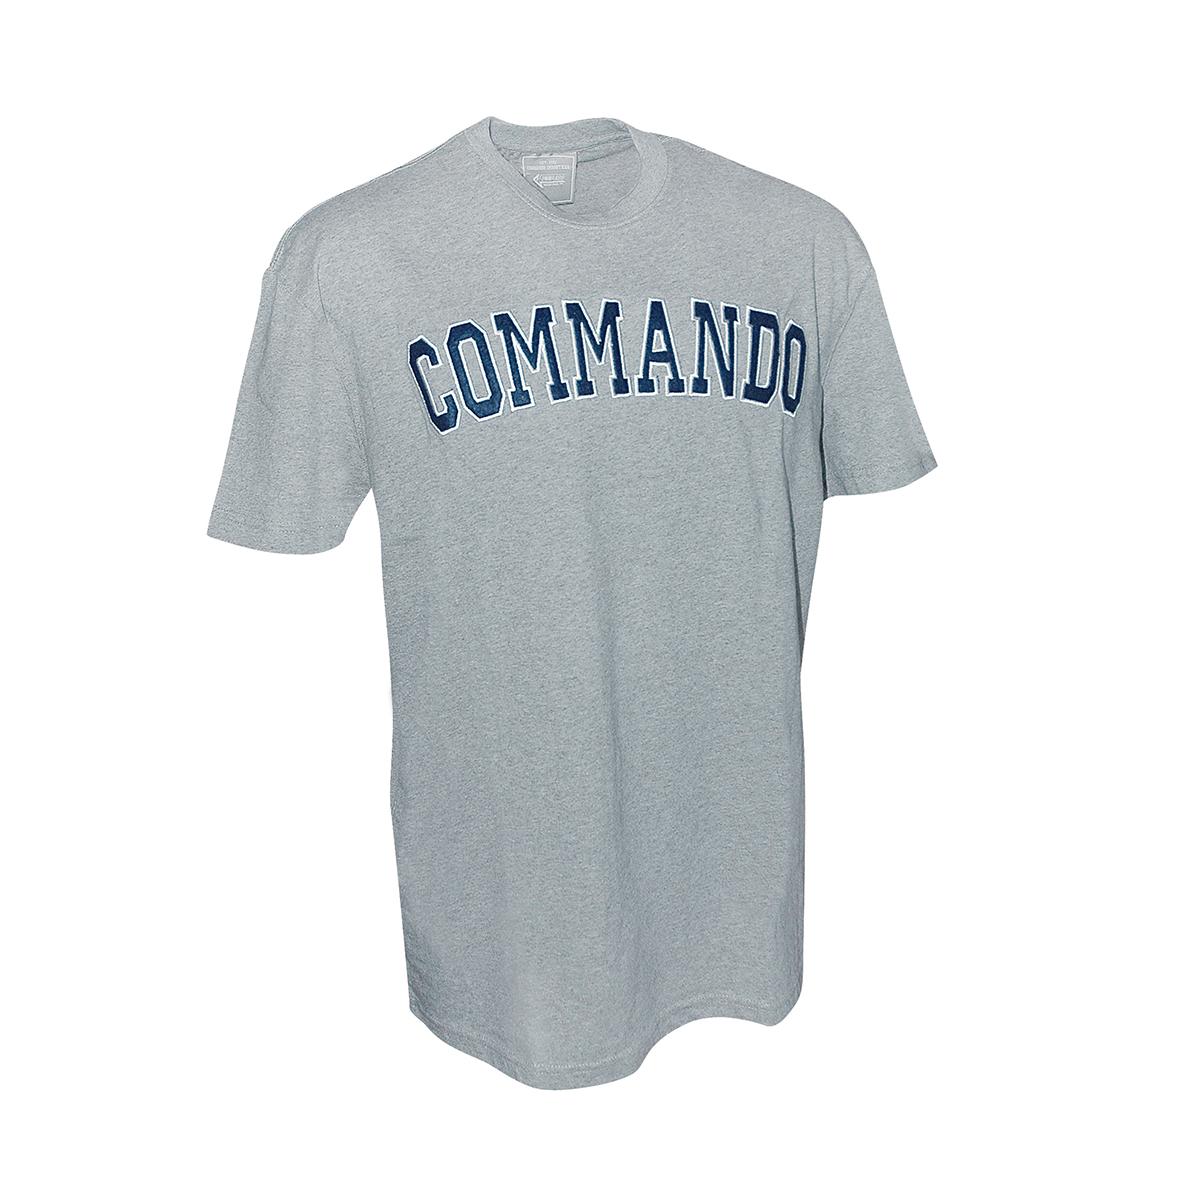 Commando - T-Shirt - APP - grau-meliert